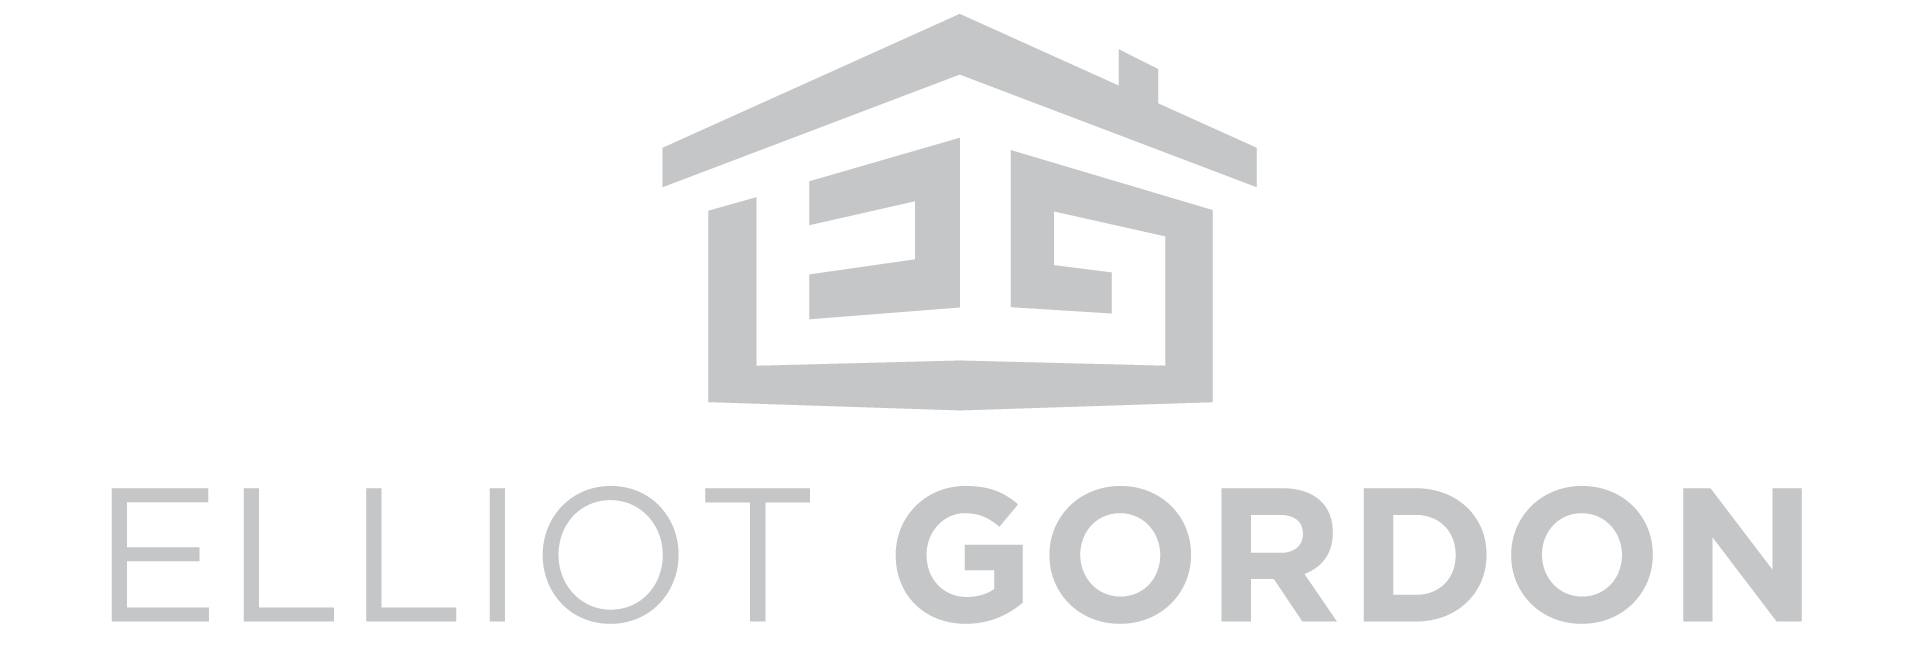 Elliot Gordon Homes